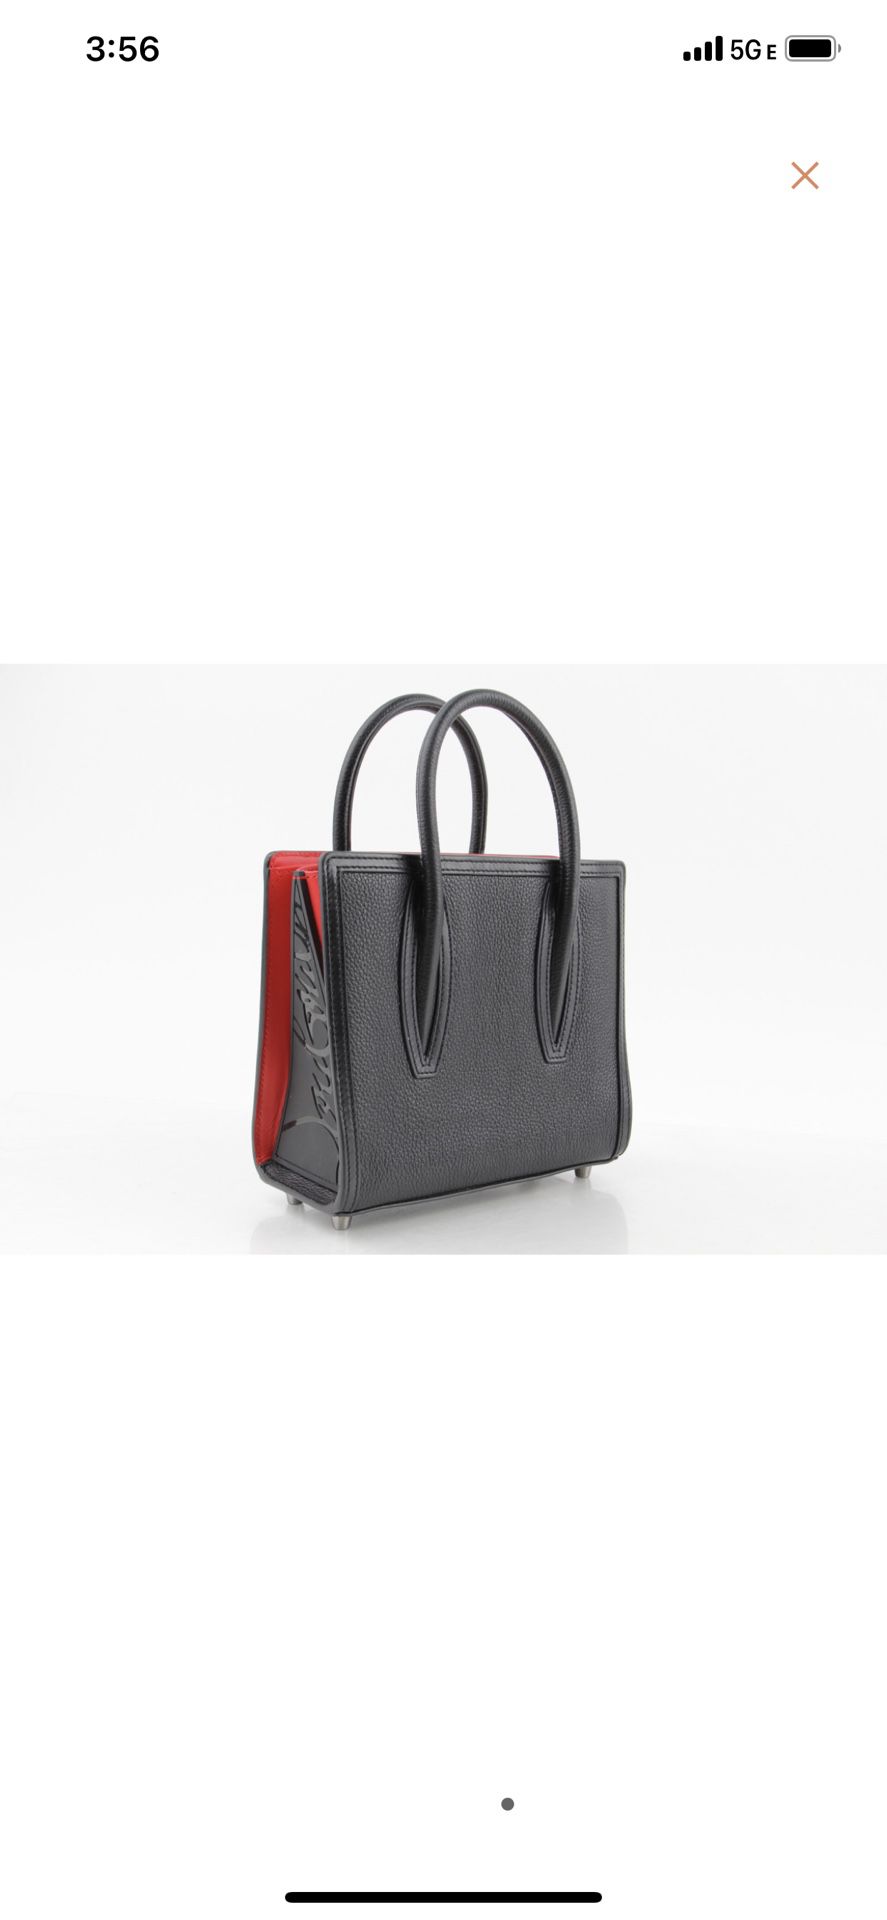 Christian Louboutin Paloma mini tote bag in Empire black calfskin